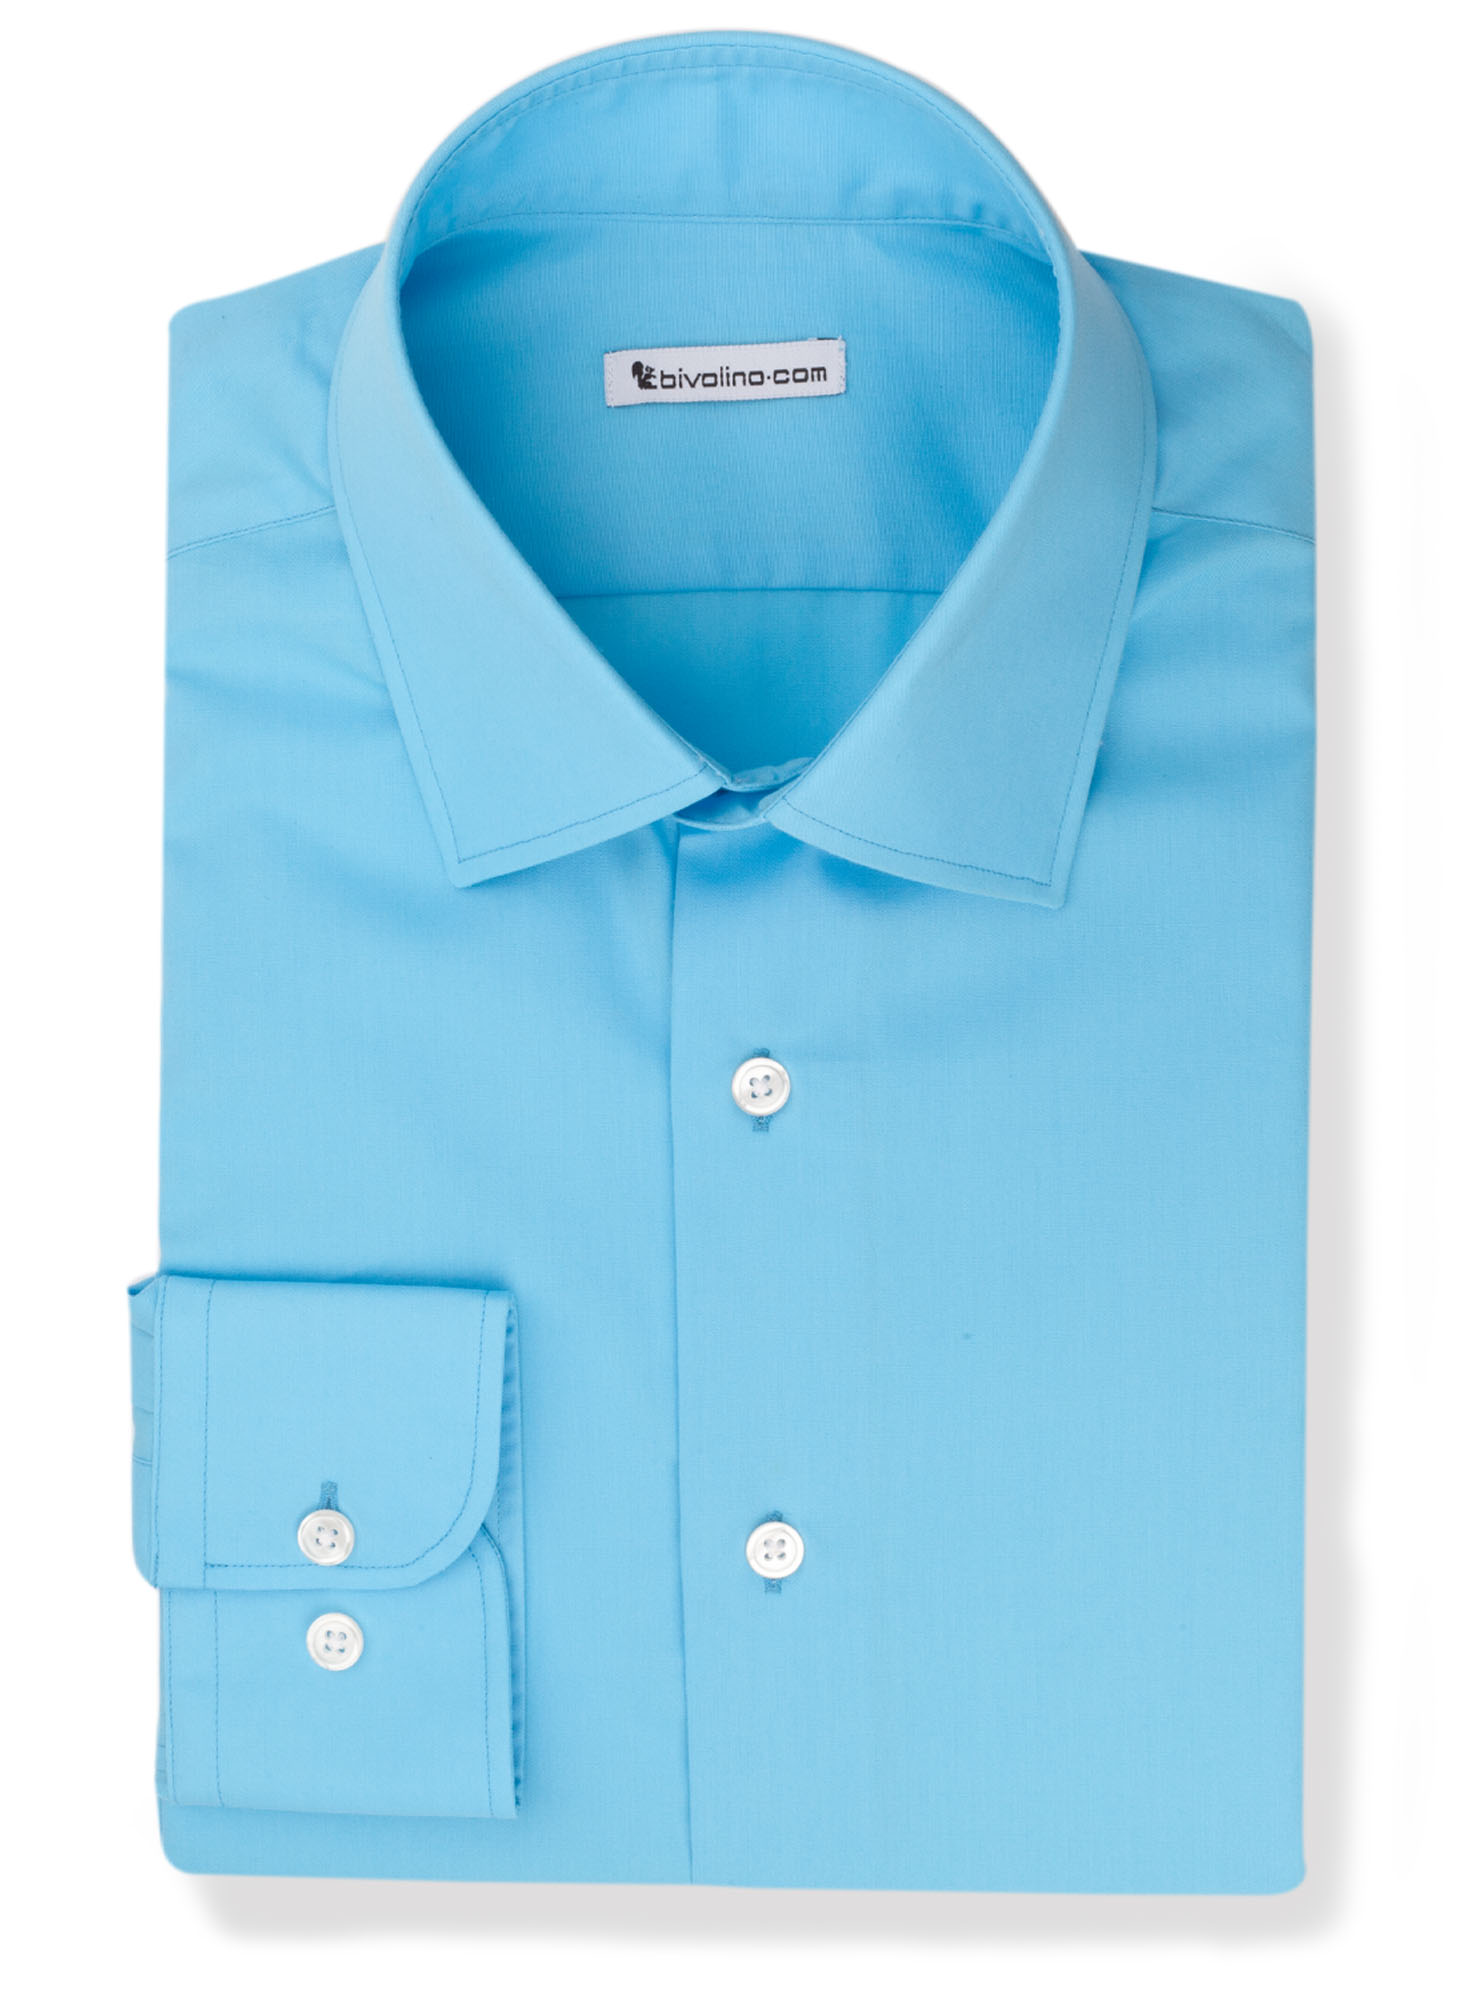 PADOVAA - turquoise  poplin mix cot-pes tailored men shirt - Brise 3